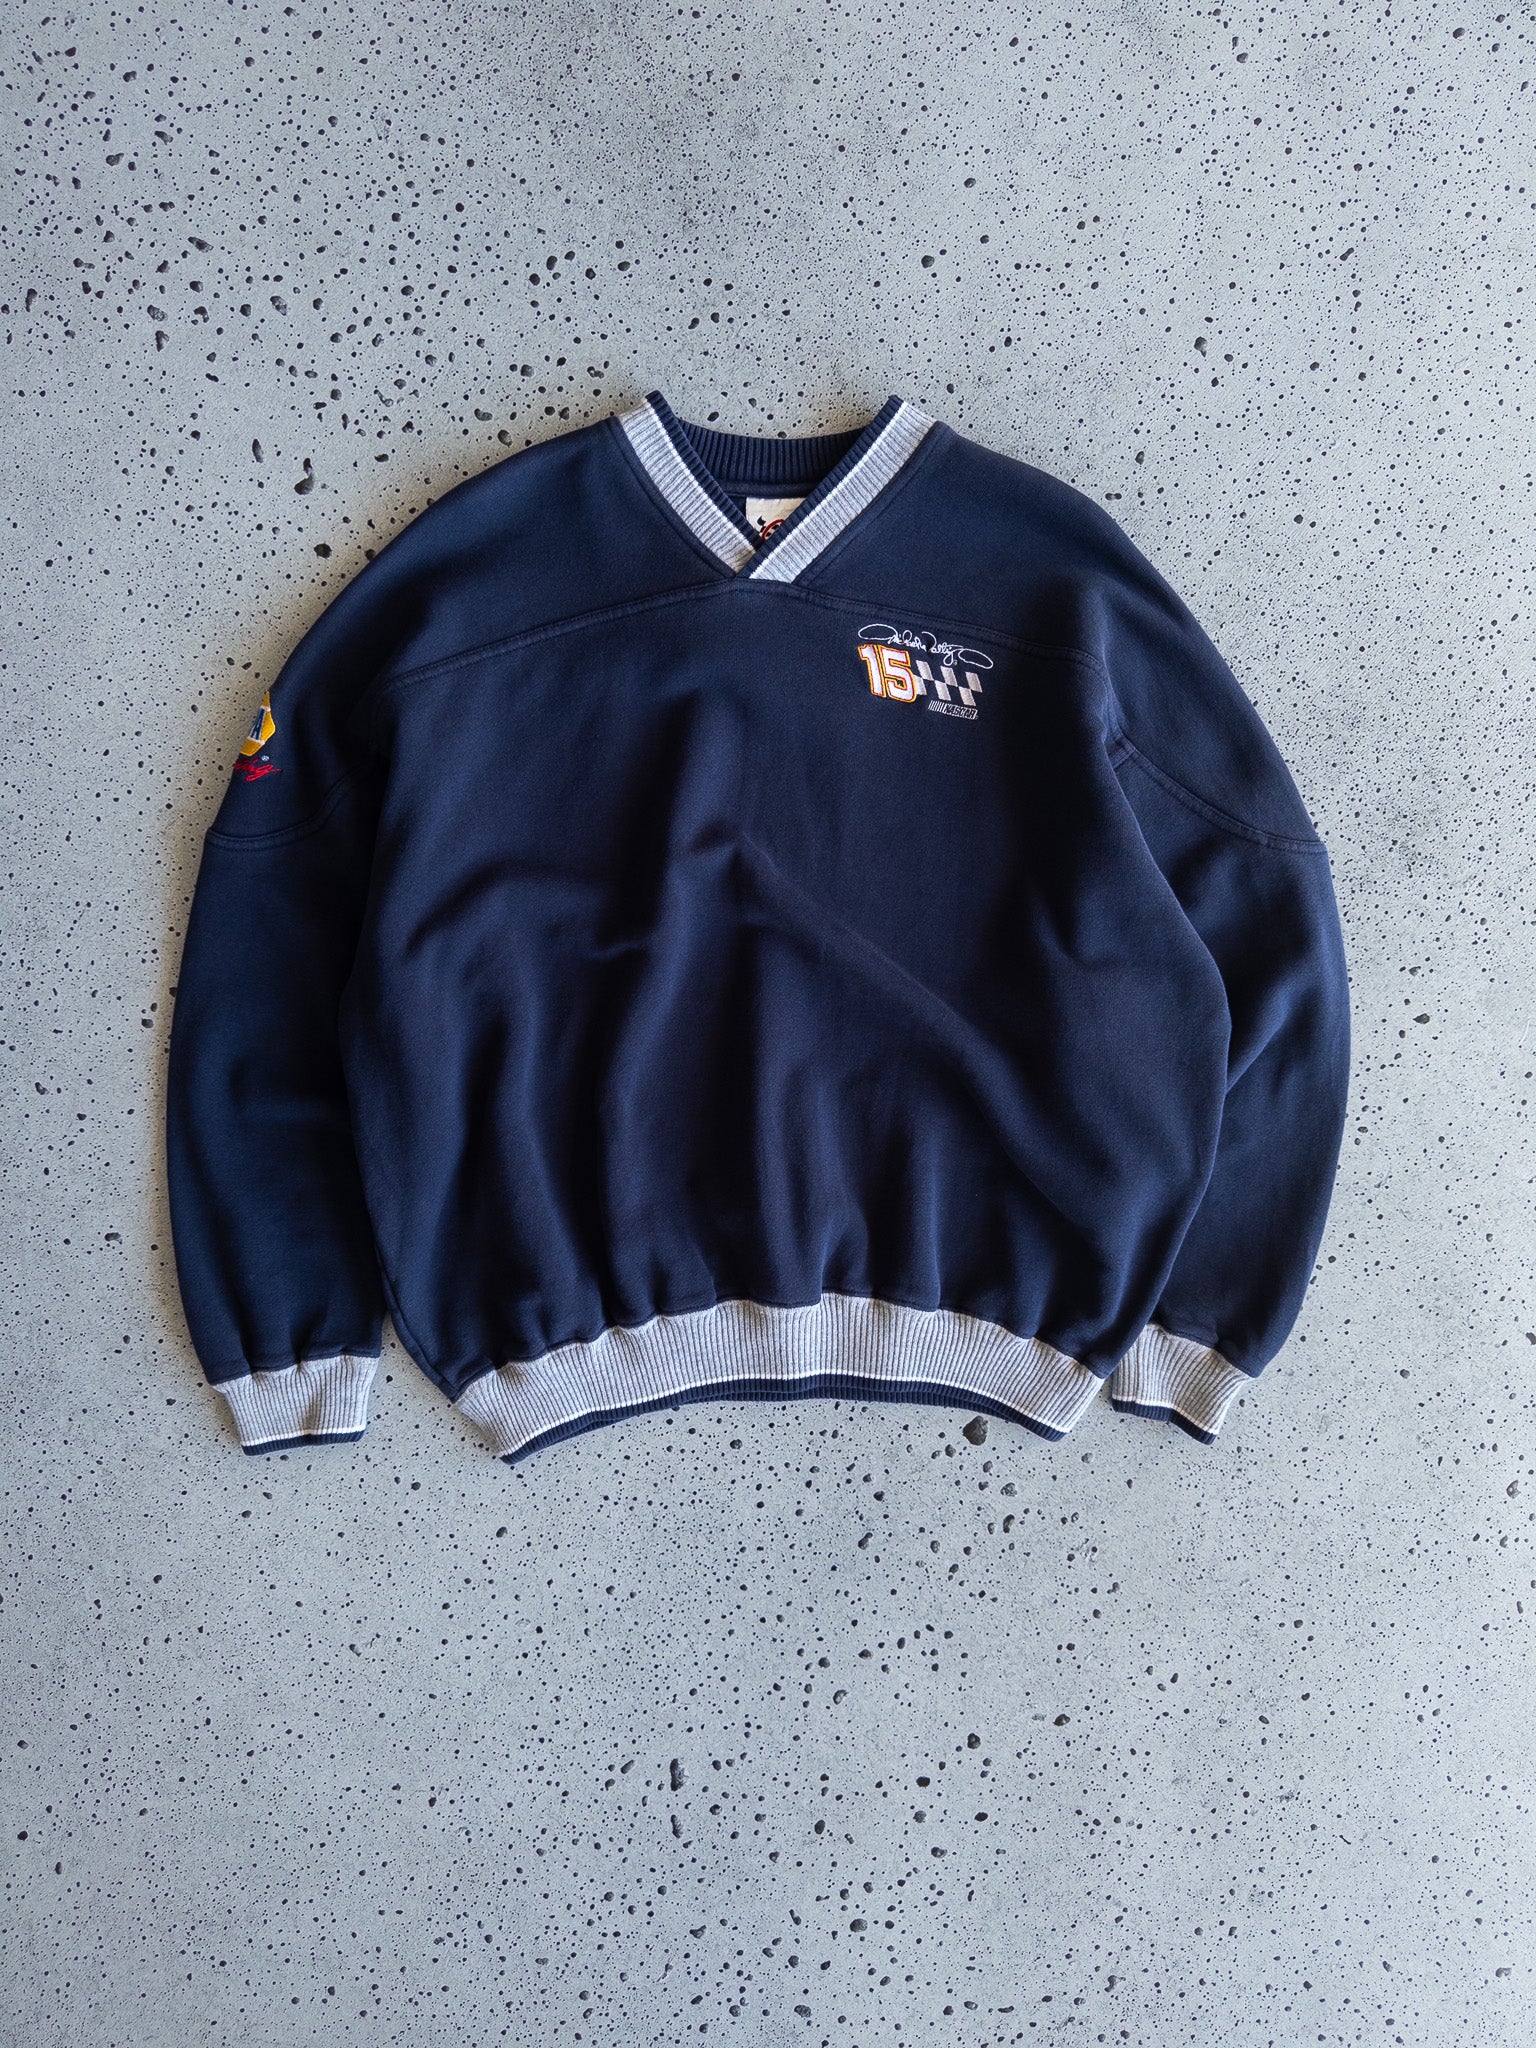 Vintage NAPA Racing Sweatshirt (L)